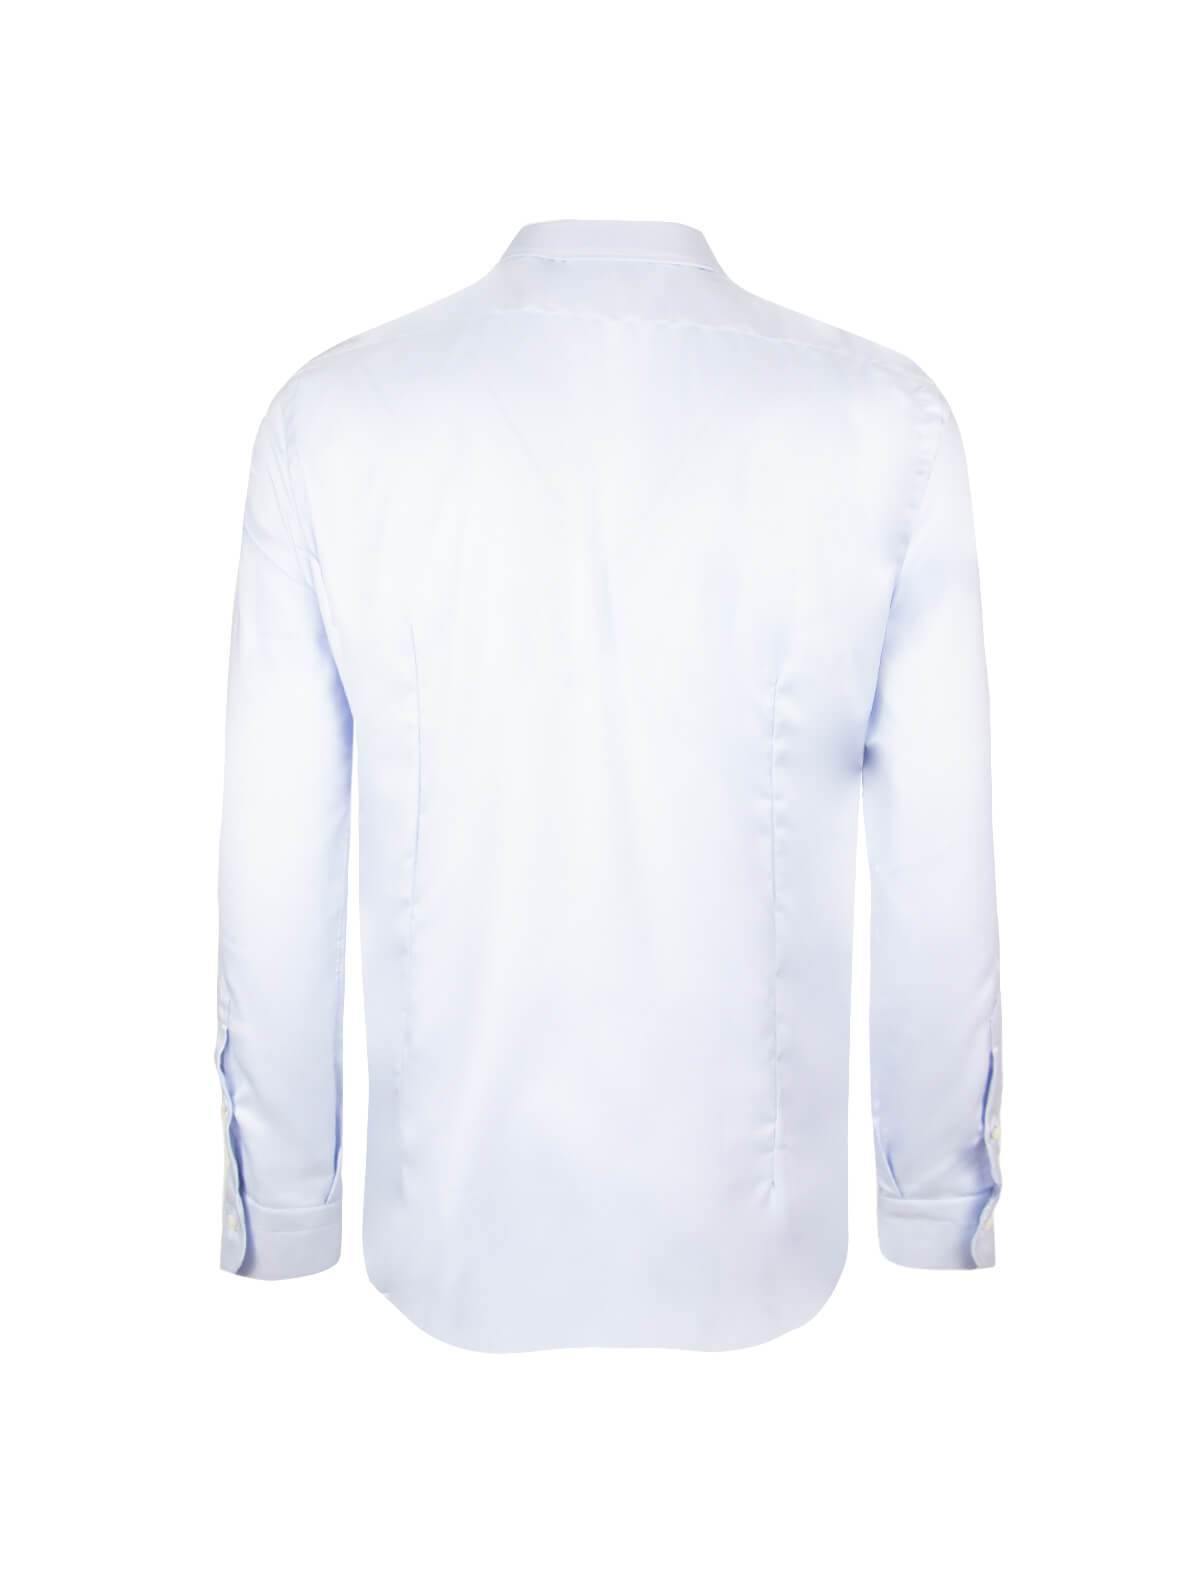 BARBA Journey Wrinkle-Resistant Textured Shirt in Light Blue | CLOSET Singapore